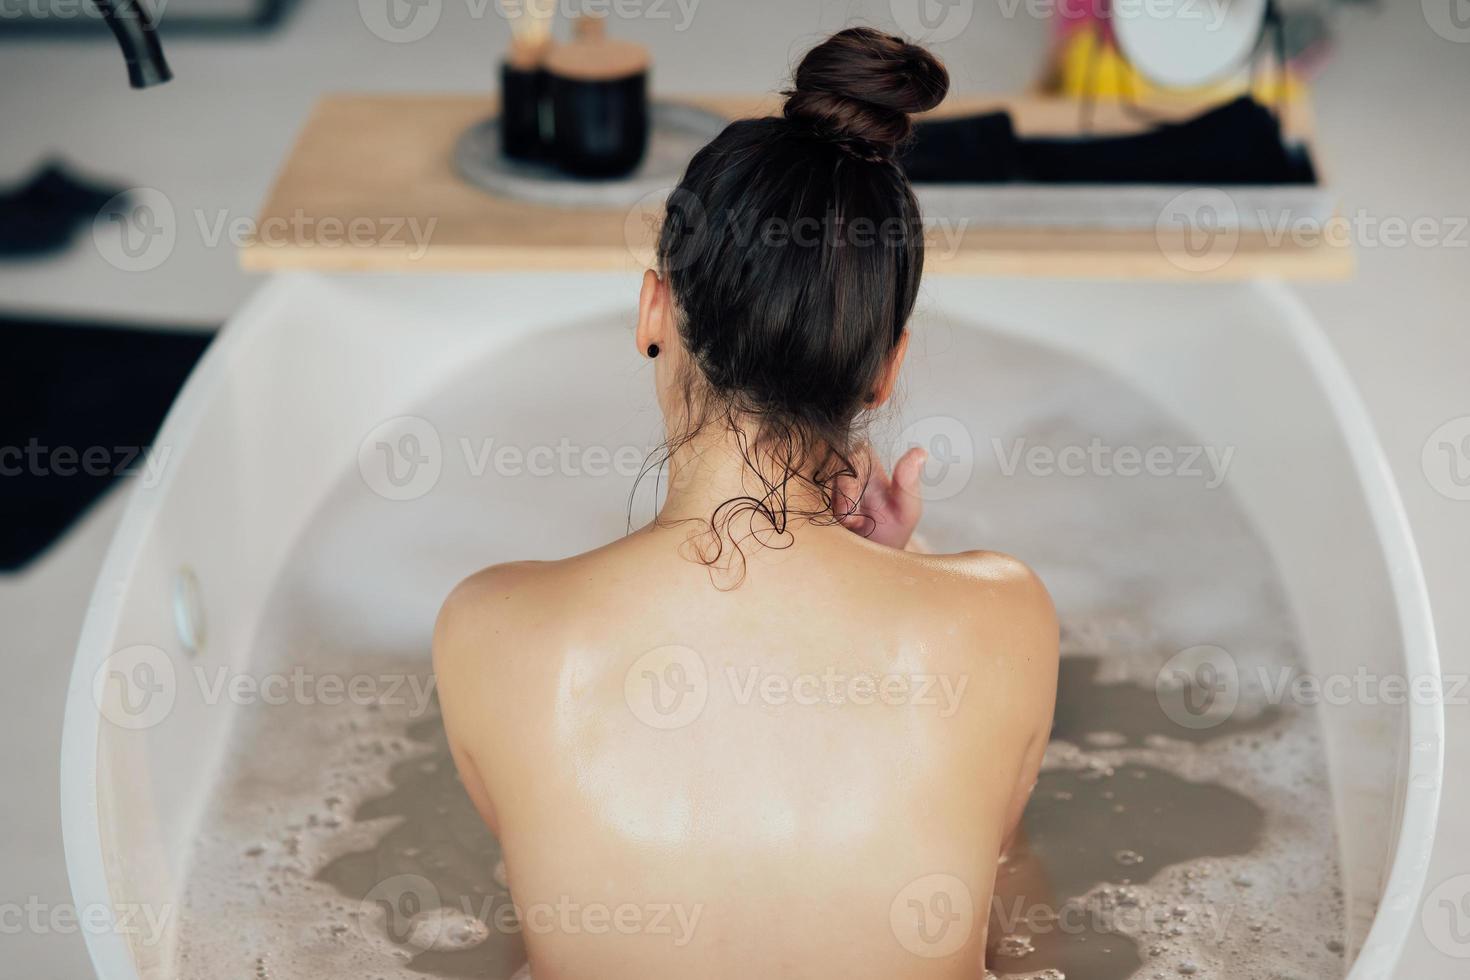 mujer joven abrazándose tomando un baño vista desde atrás foto